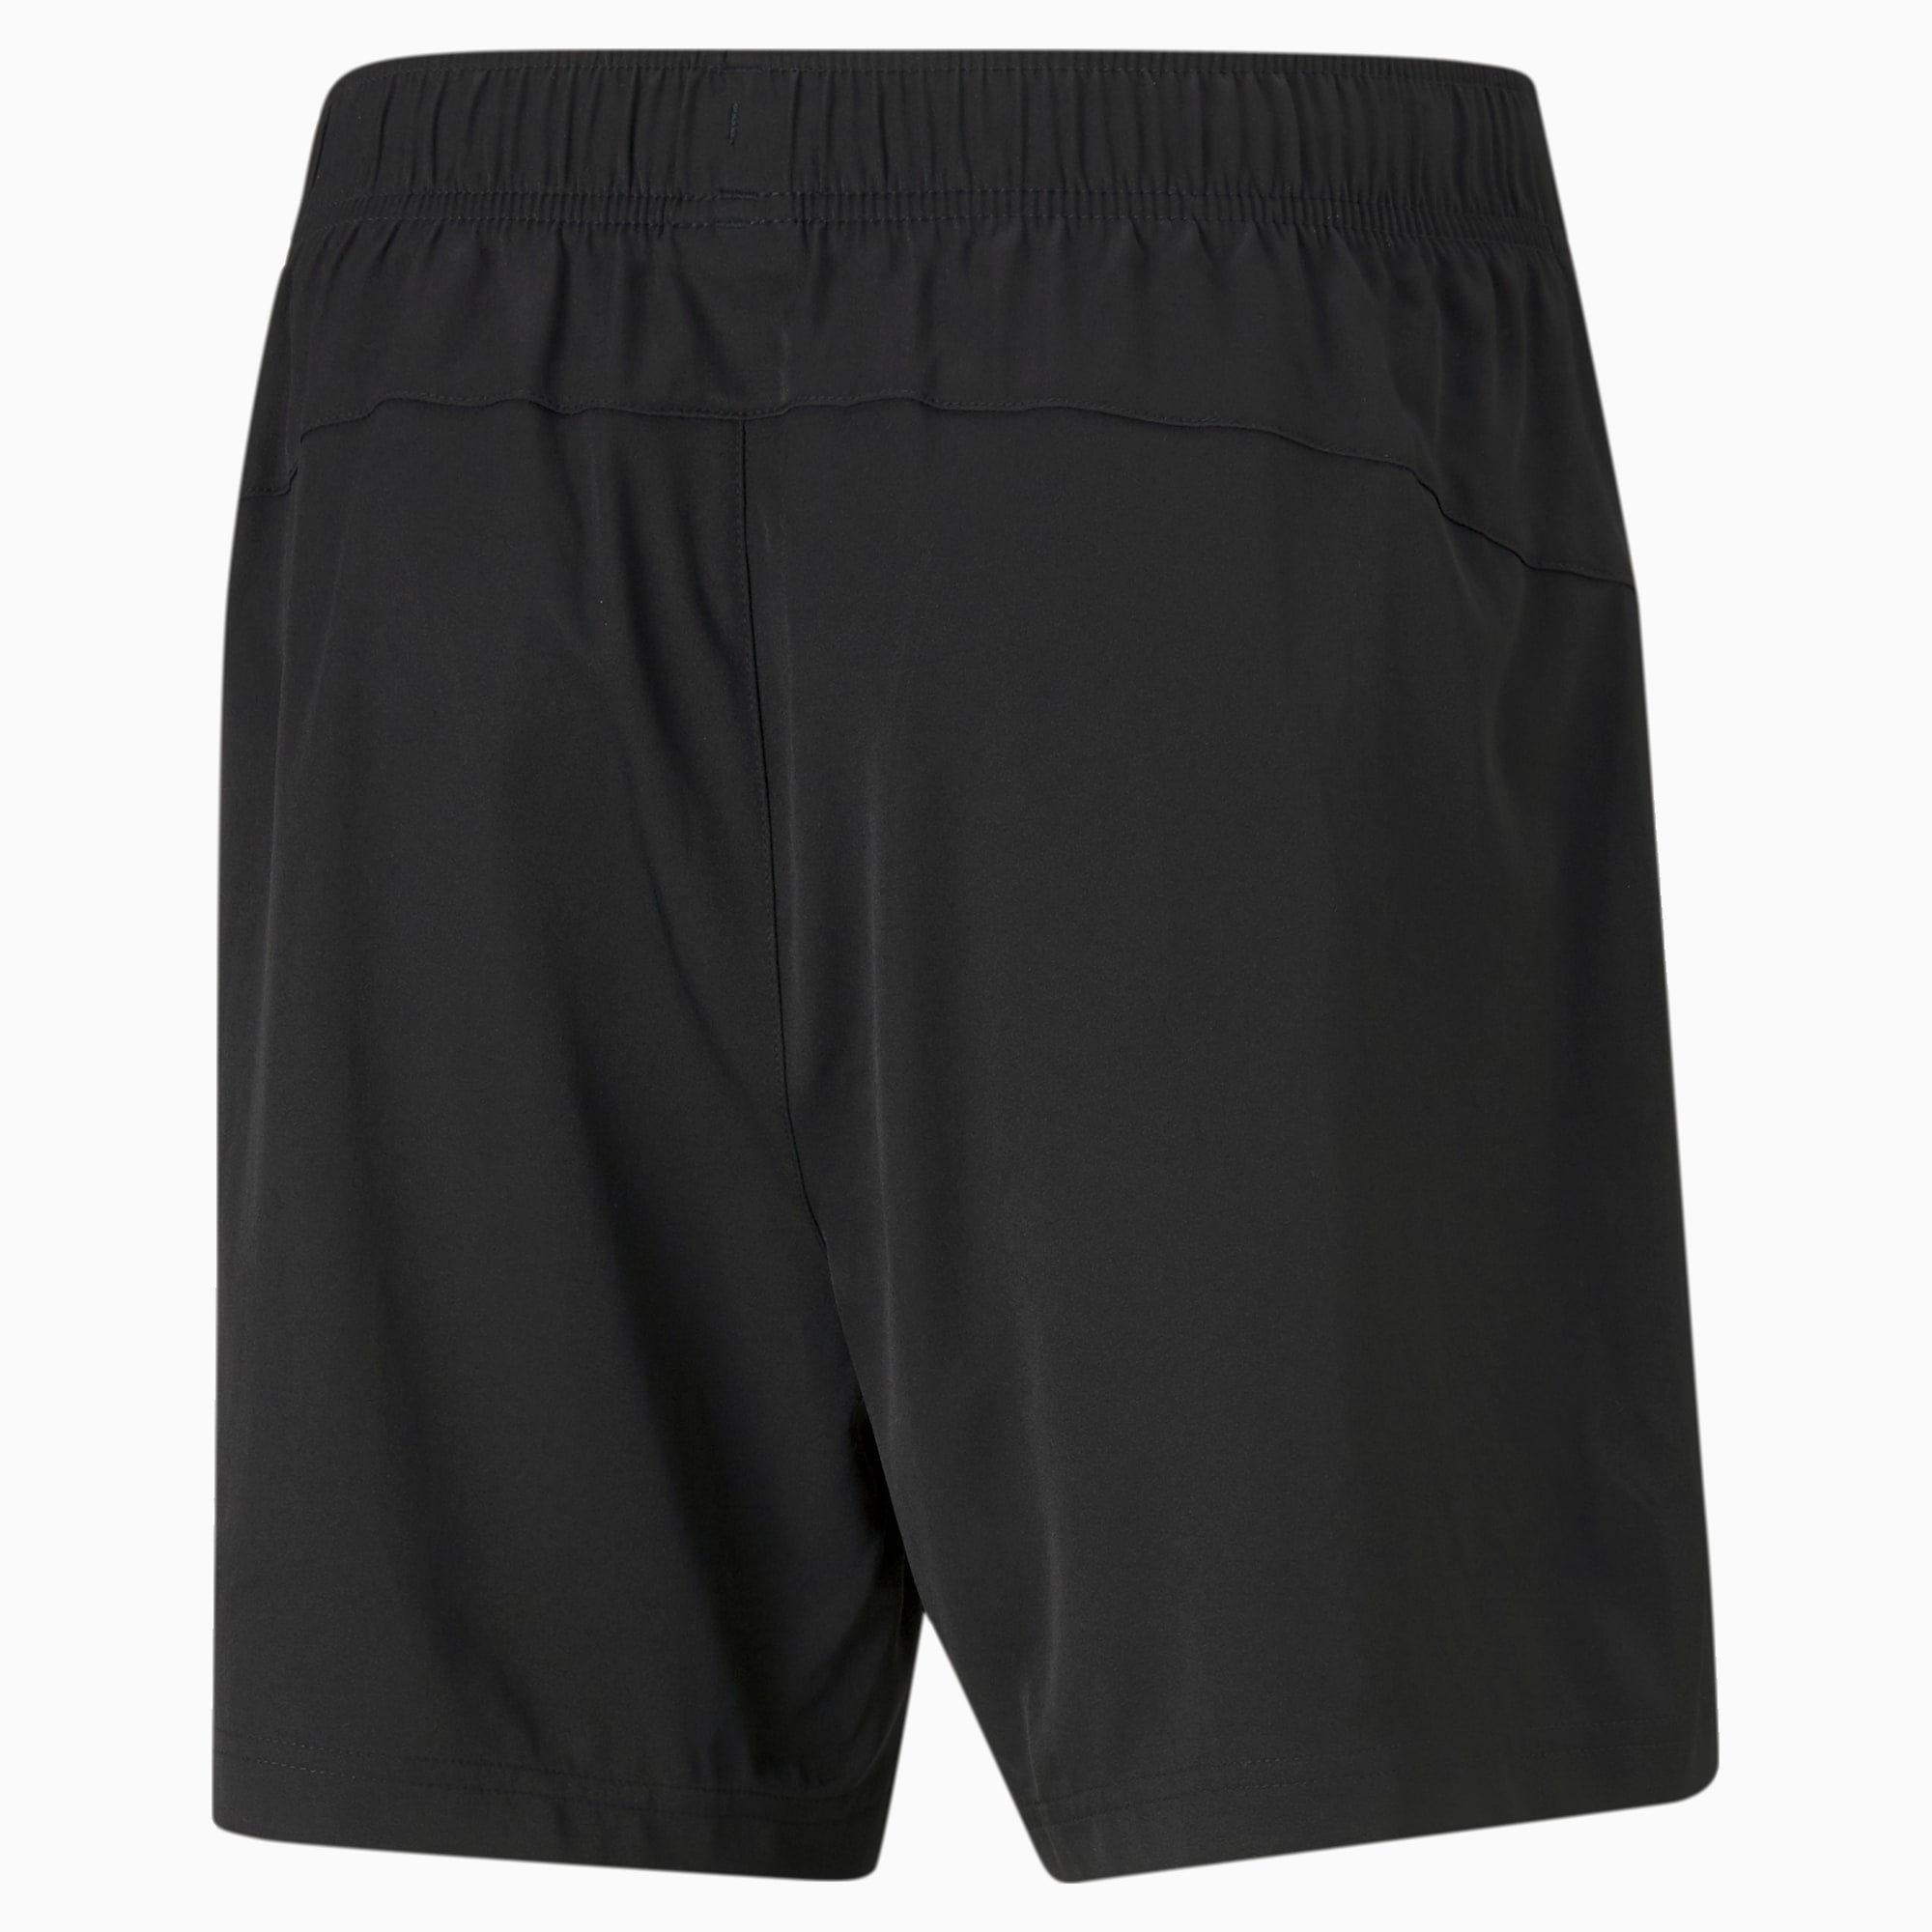 PUMA Active Woven 5 Men's Shorts, Black, Size XL, Clothing